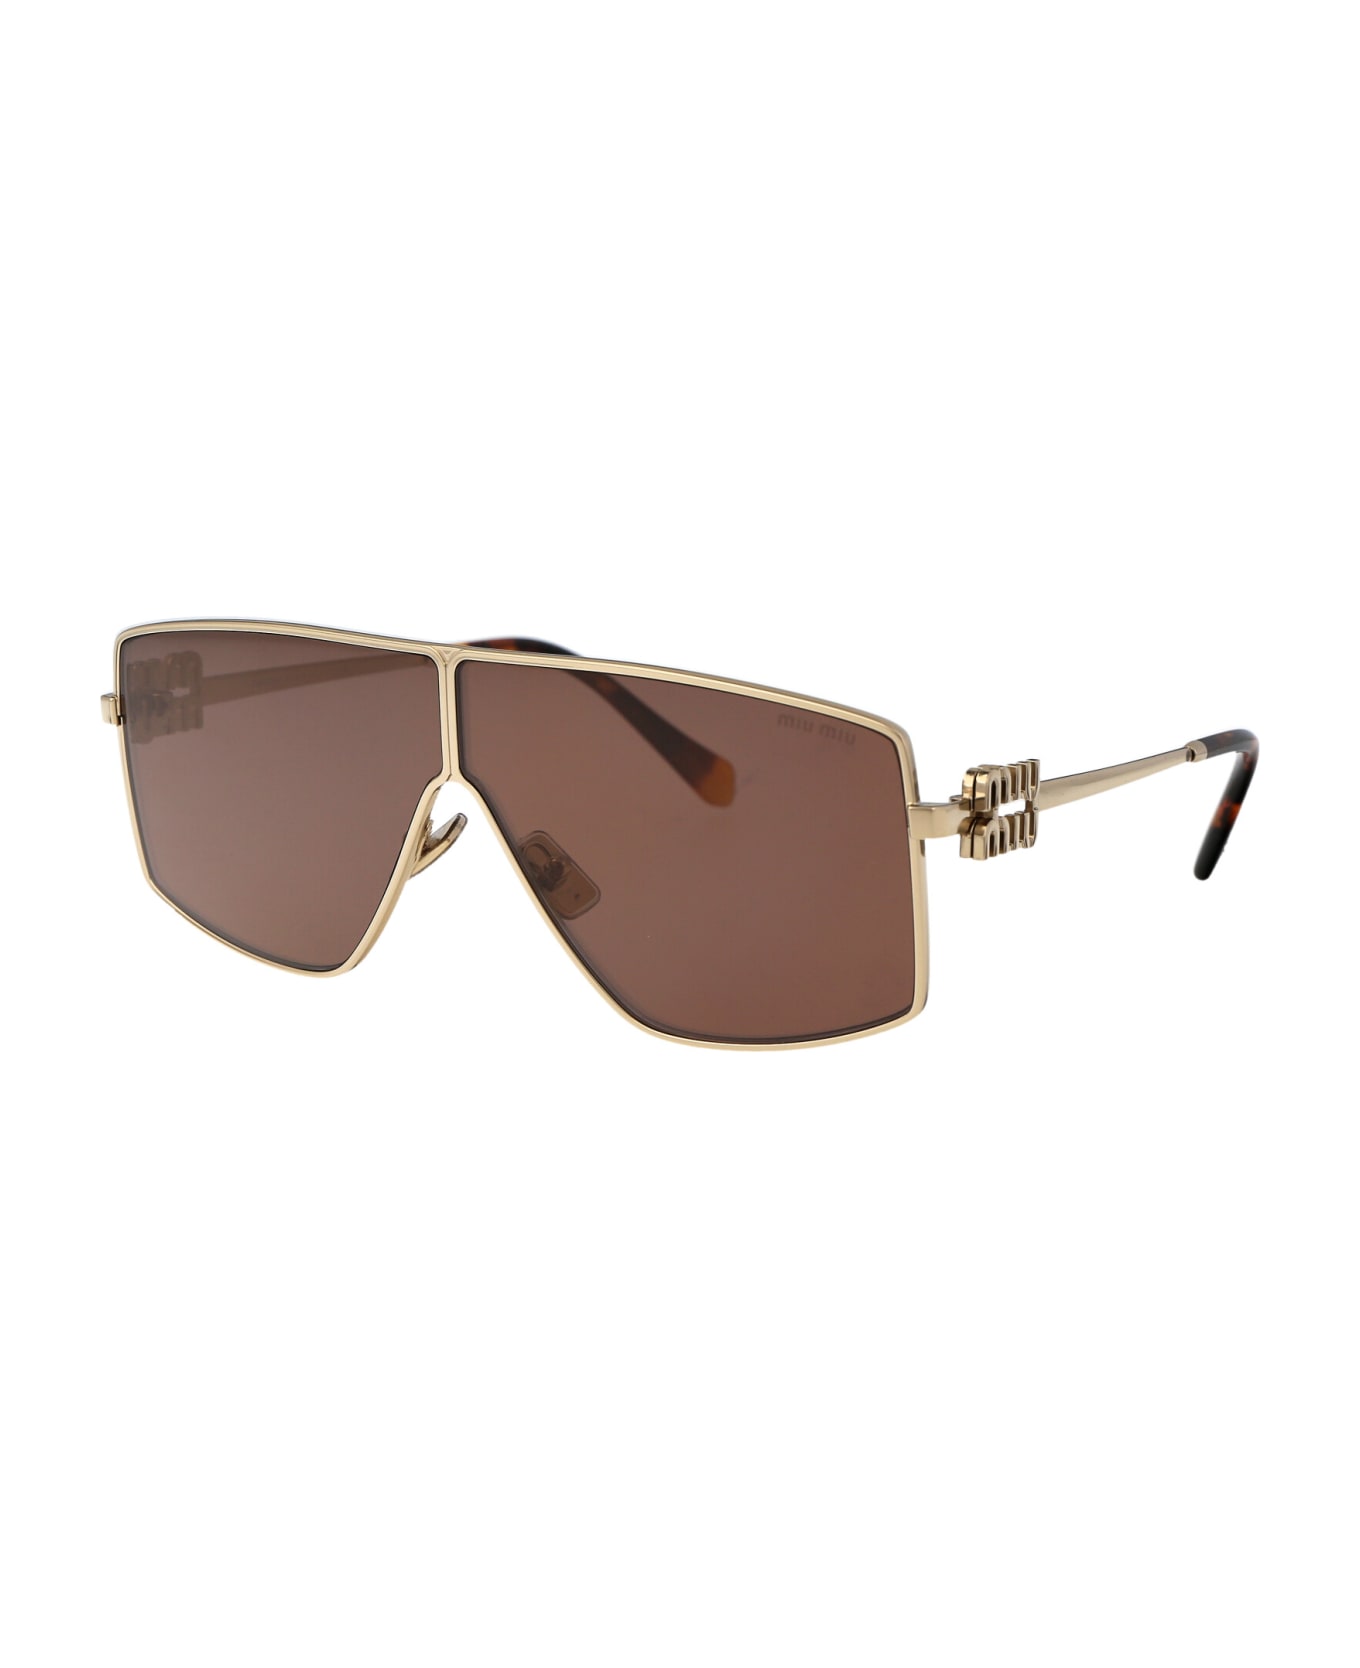 Miu Miu Eyewear 0mu 51zs Sunglasses - ZVN70D Pale Gold